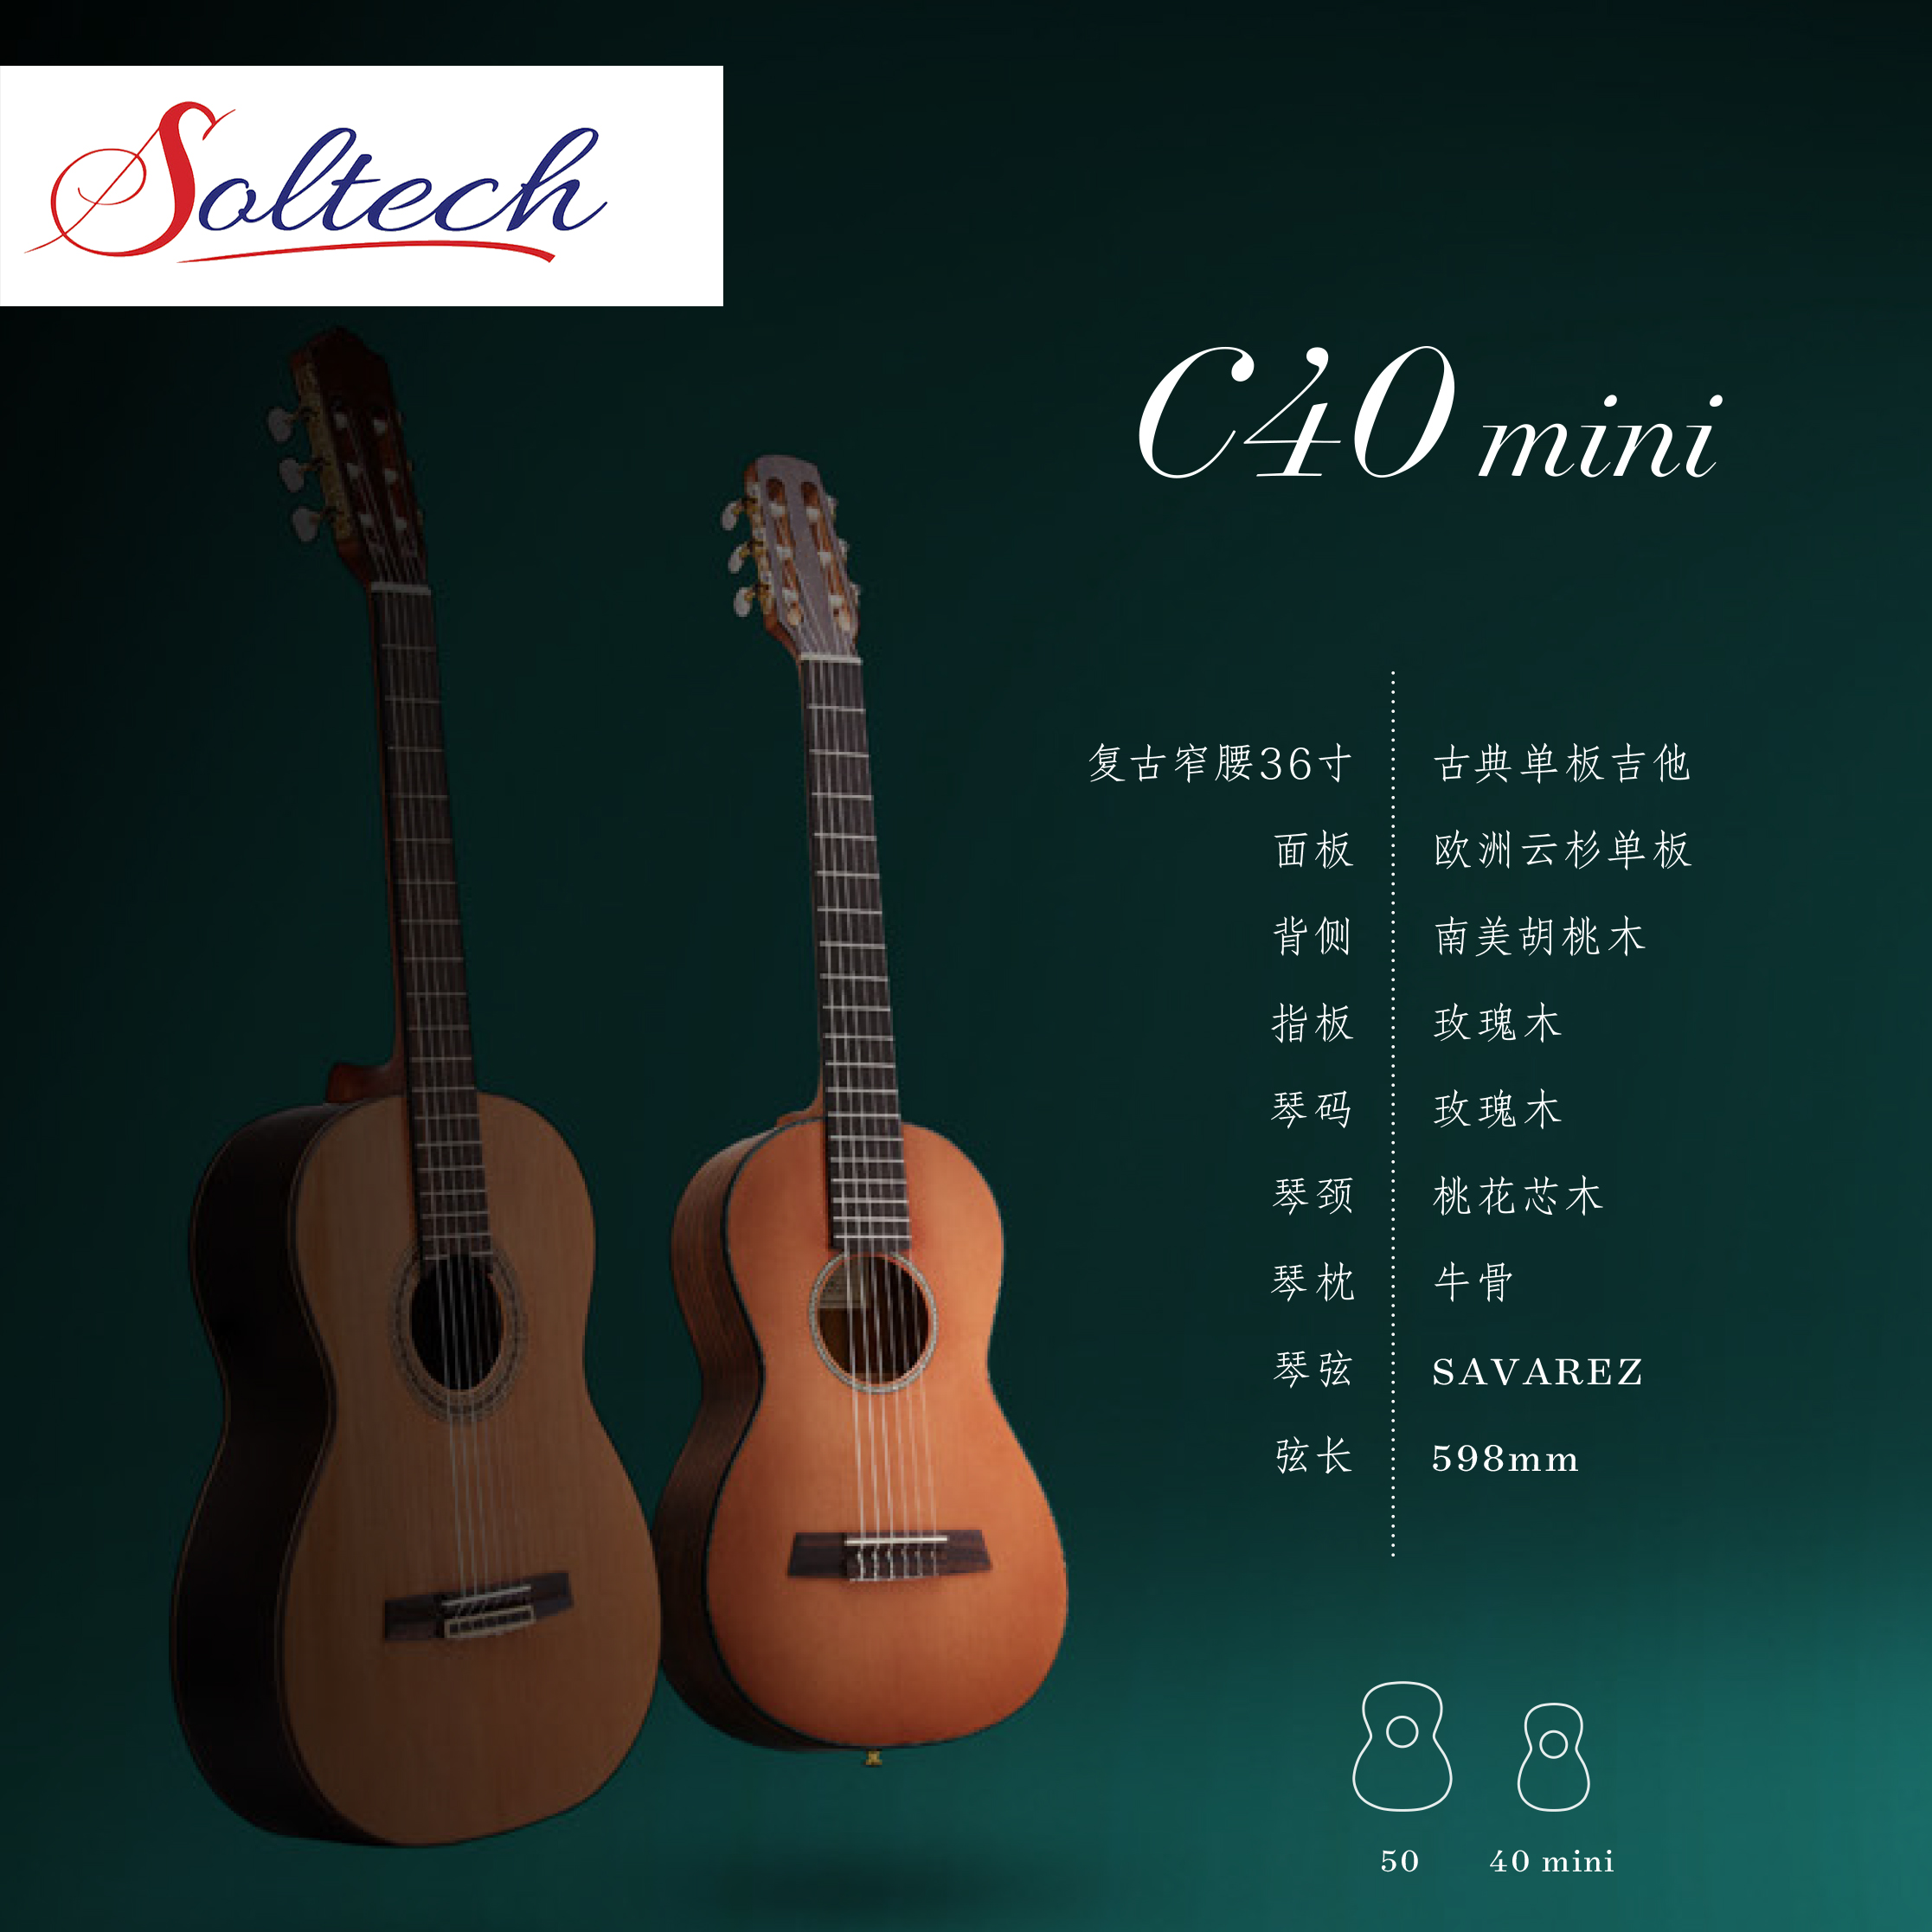 C 40 mini Classic Guitar with African Walnut Wood - Guizhou 